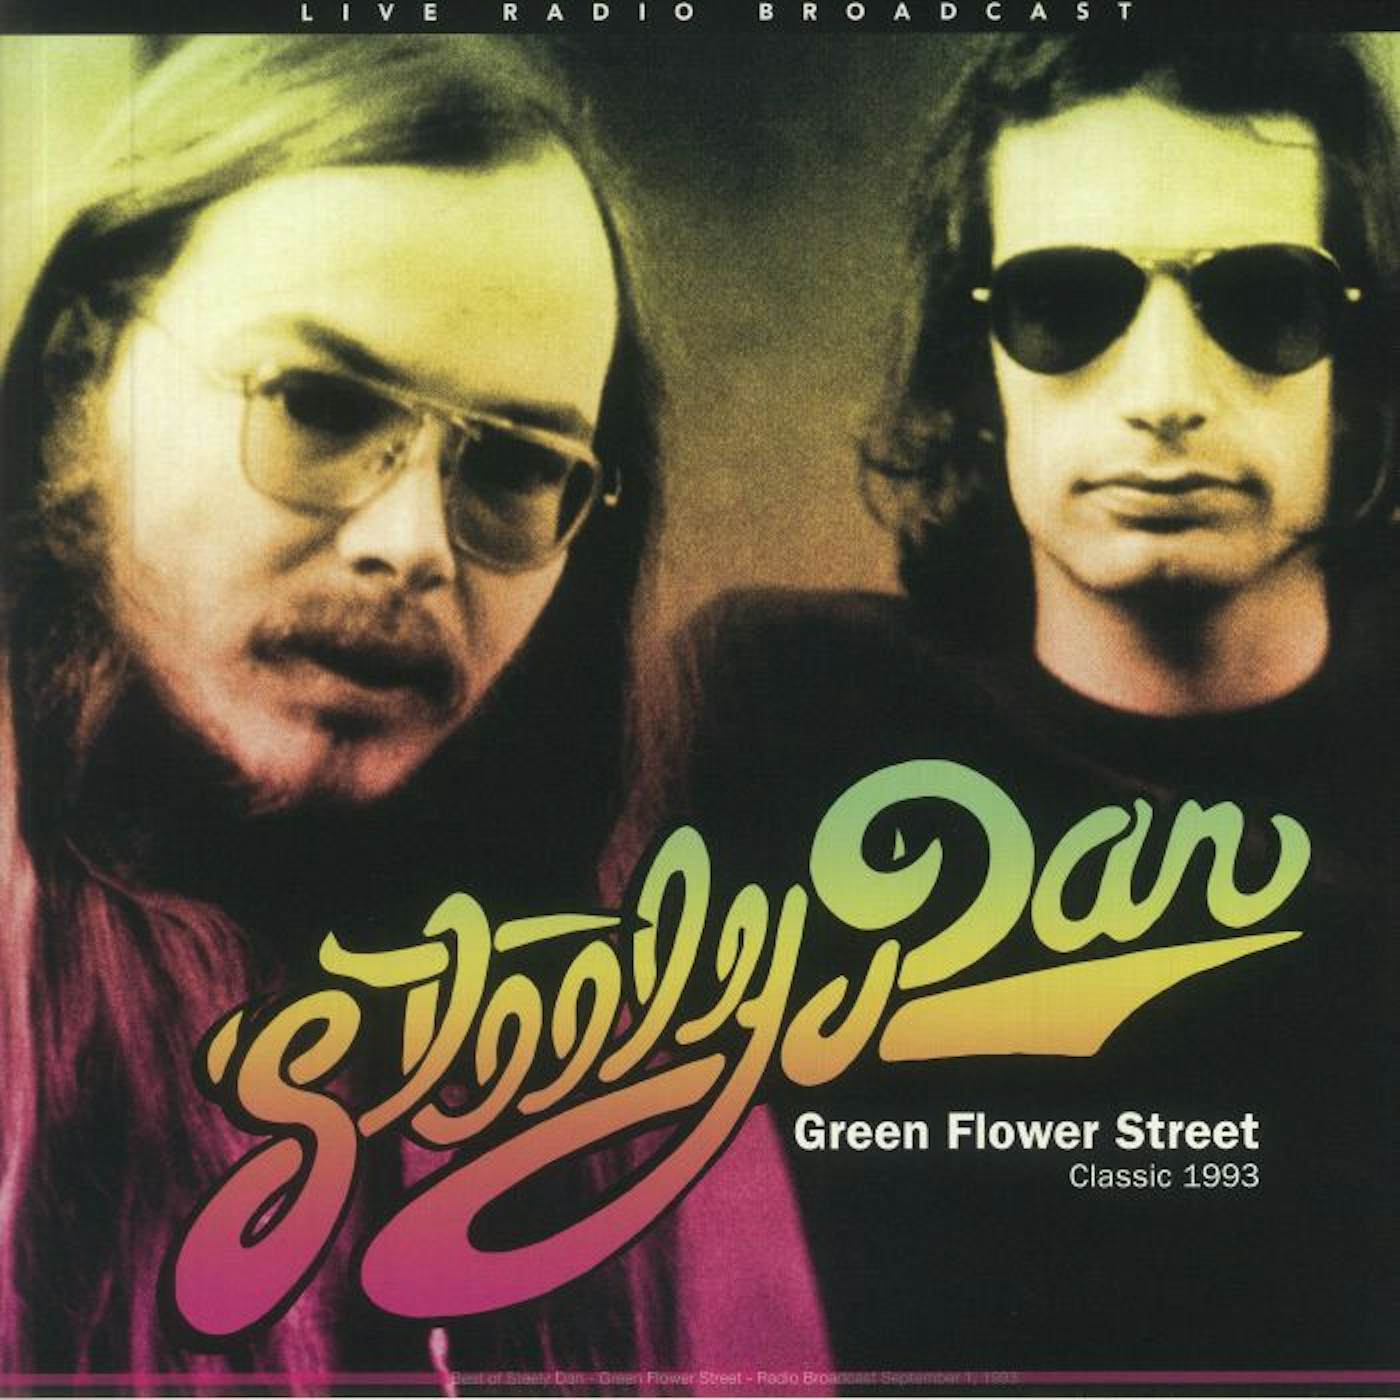 Steely Dan LP Vinyl Record - Best Of Green Flower Street - Classic 1993 Radio Broadcast September 1993